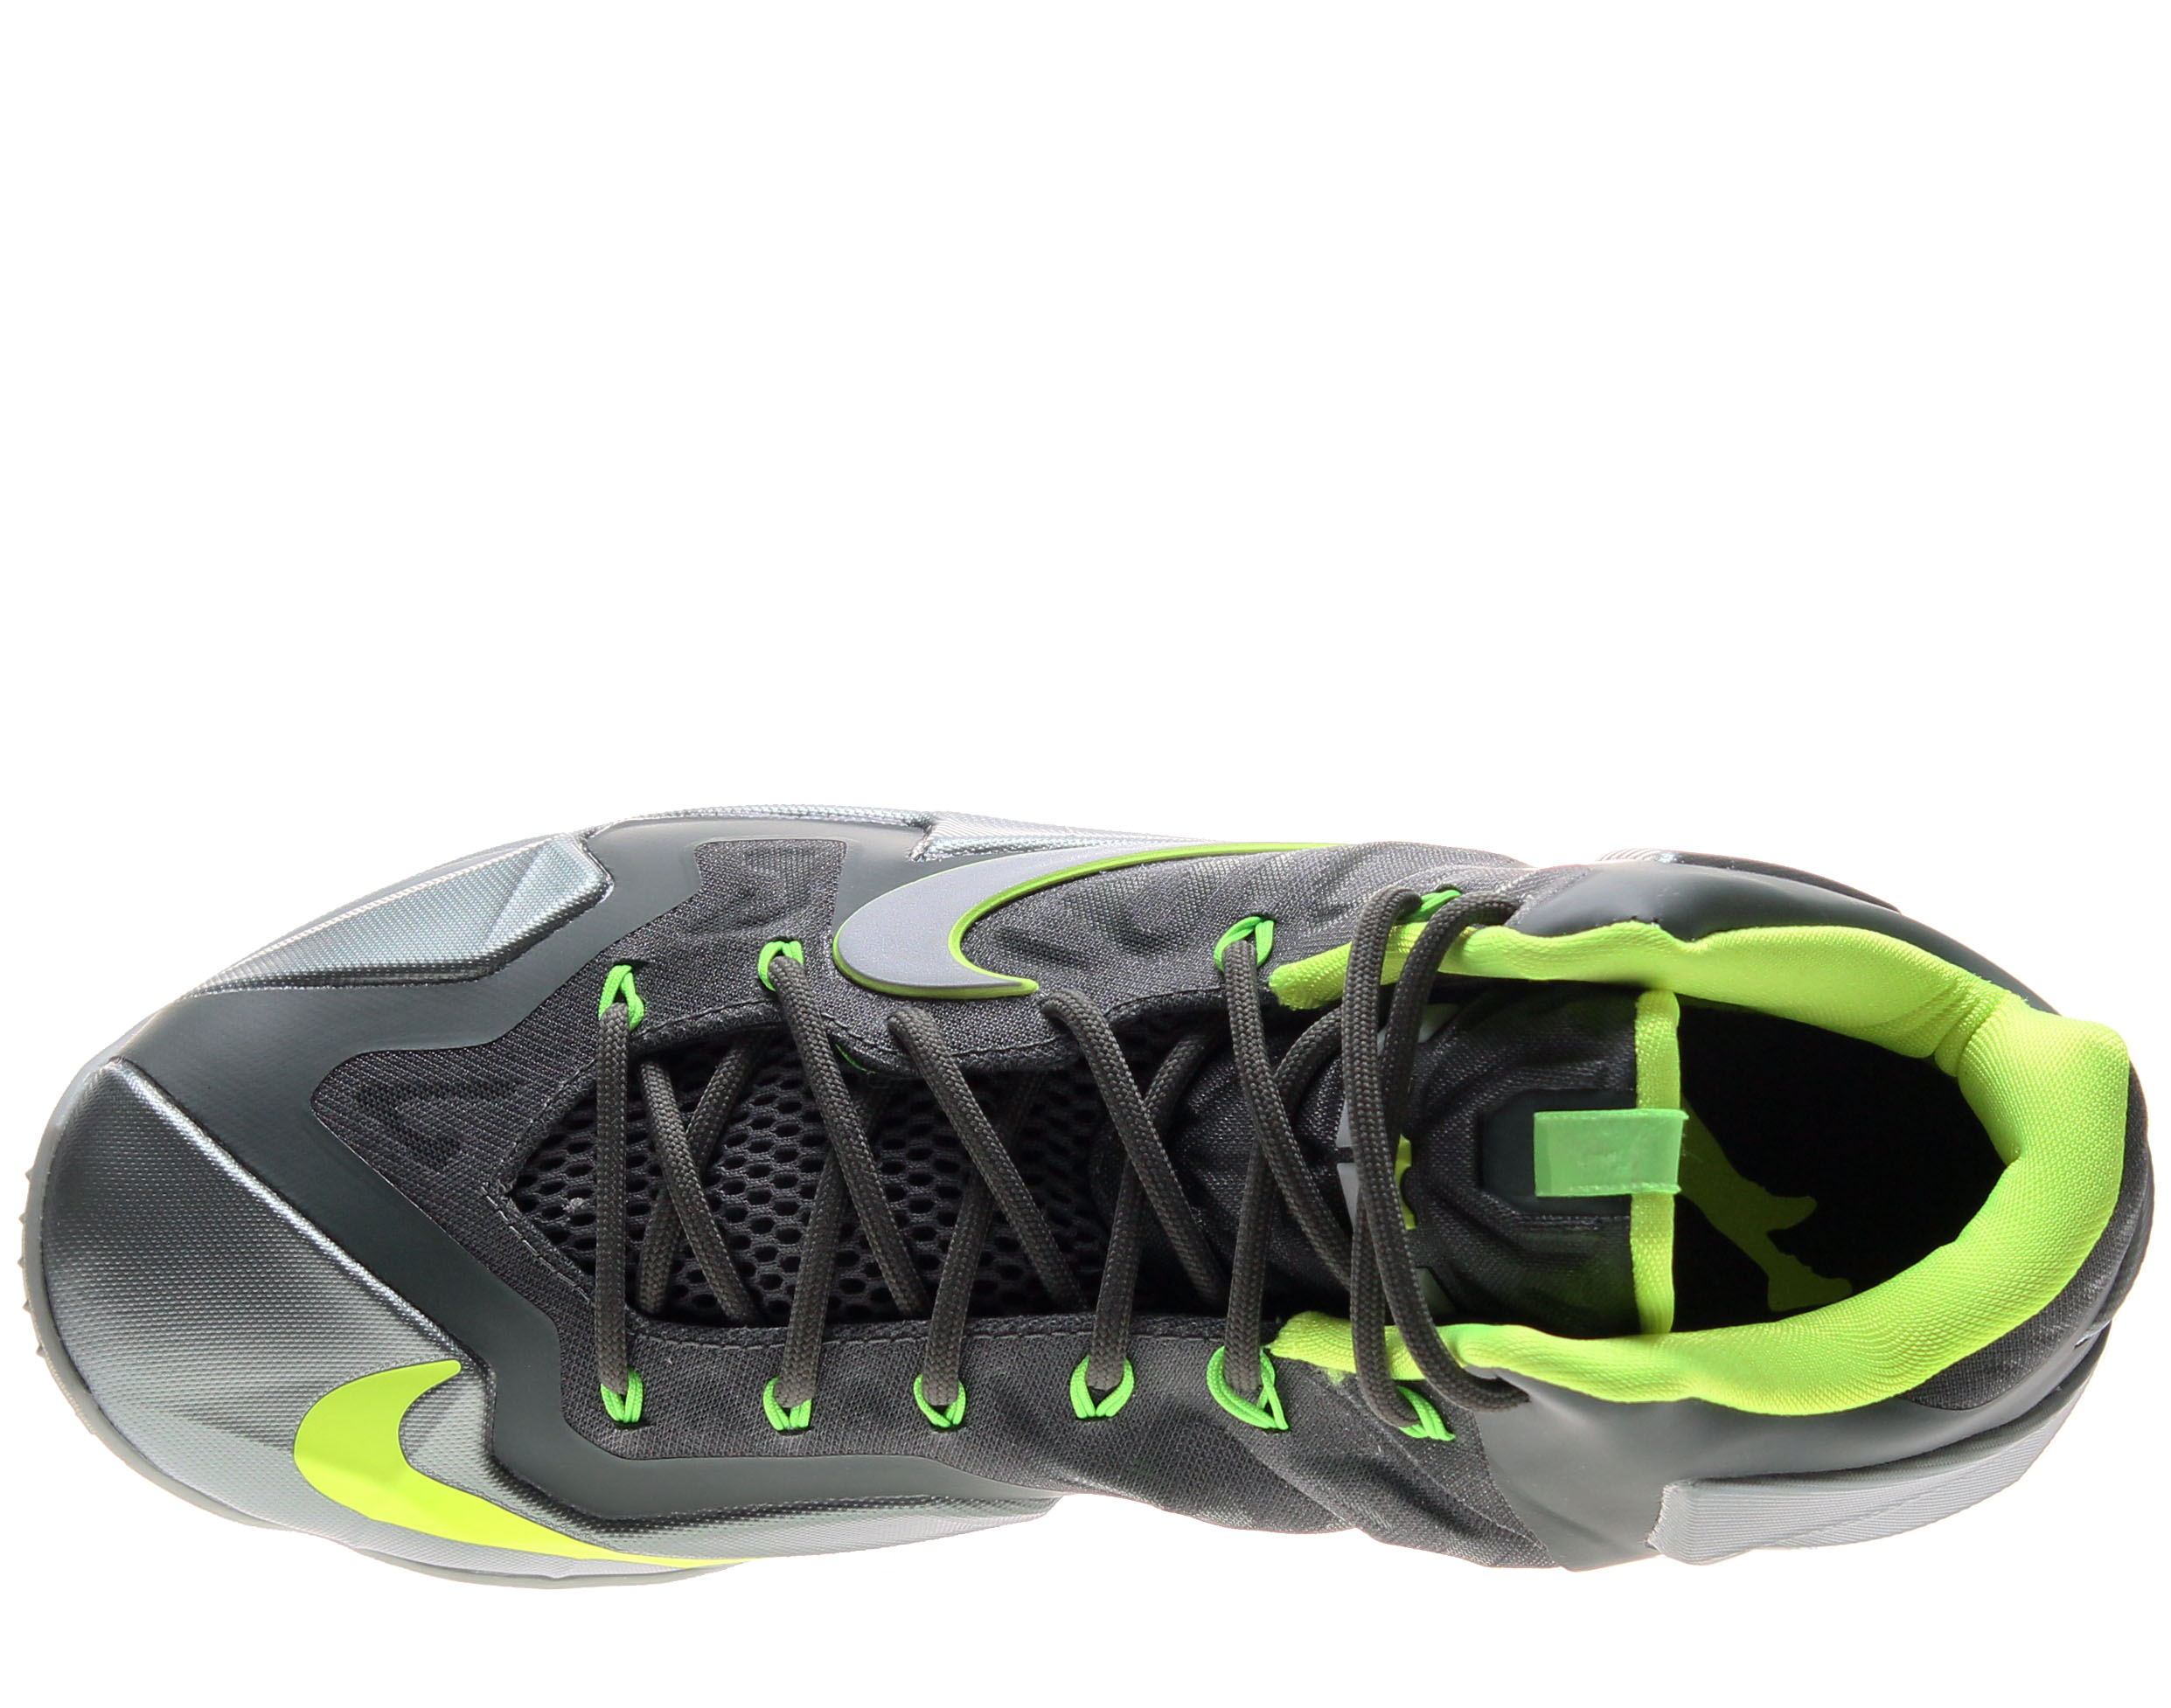 Nike Lebron XI Men's Basketball Shoes MC Green/Spray-Dark MC Green/Volt 616175-300 (12 D(M) US) - image 4 of 6